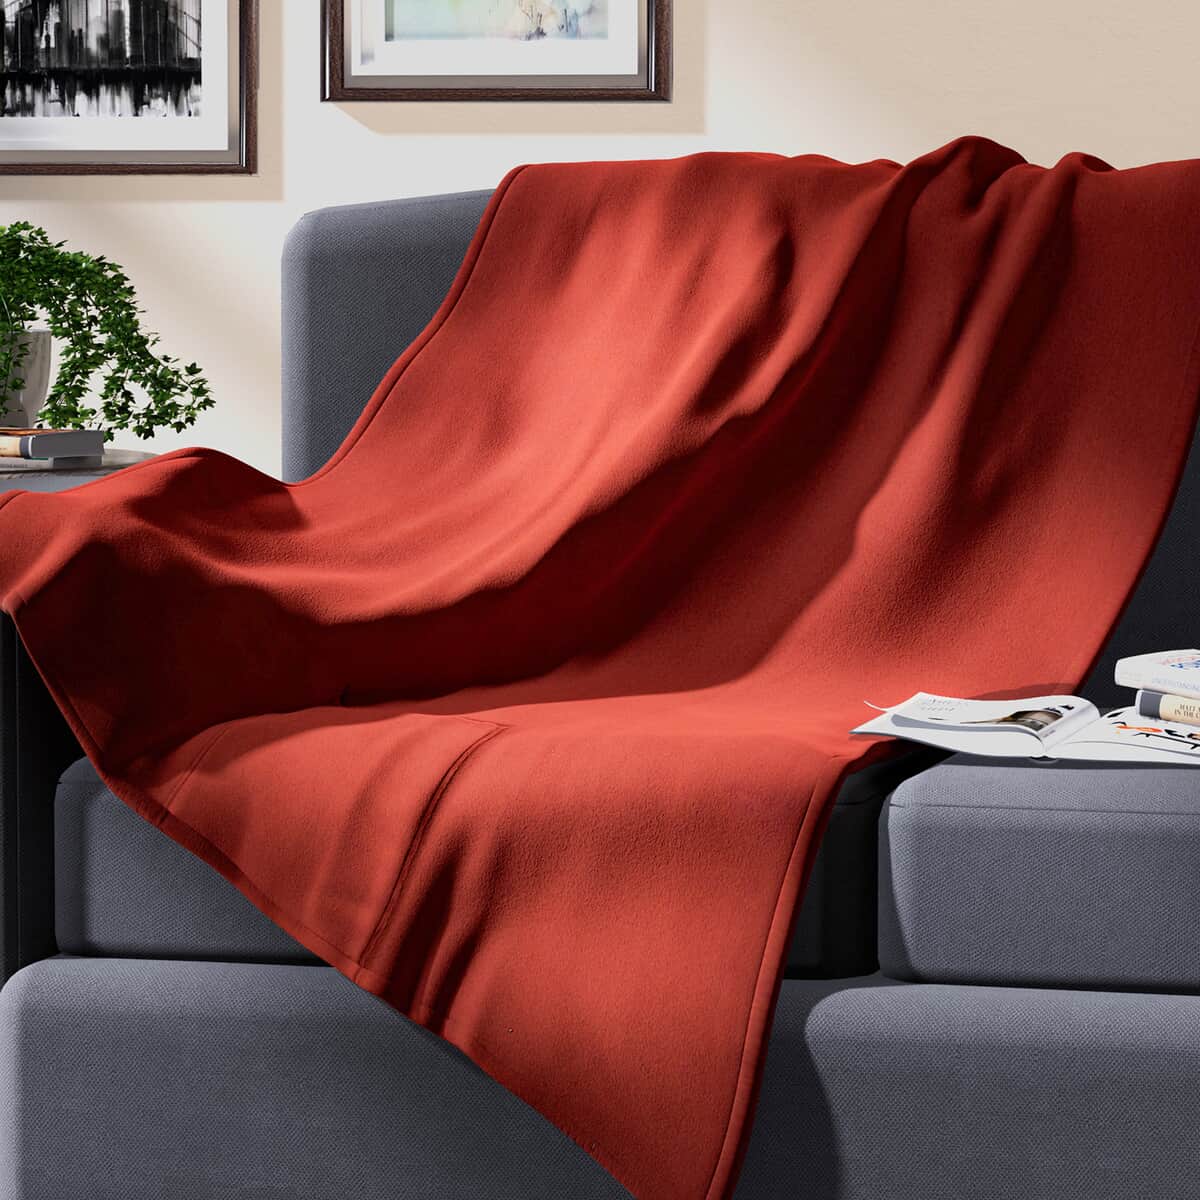 Homesmart 2 in 1 Red Solid Fleece Travel Blanket with Folded Storage Pocket (Microfiber) image number 0